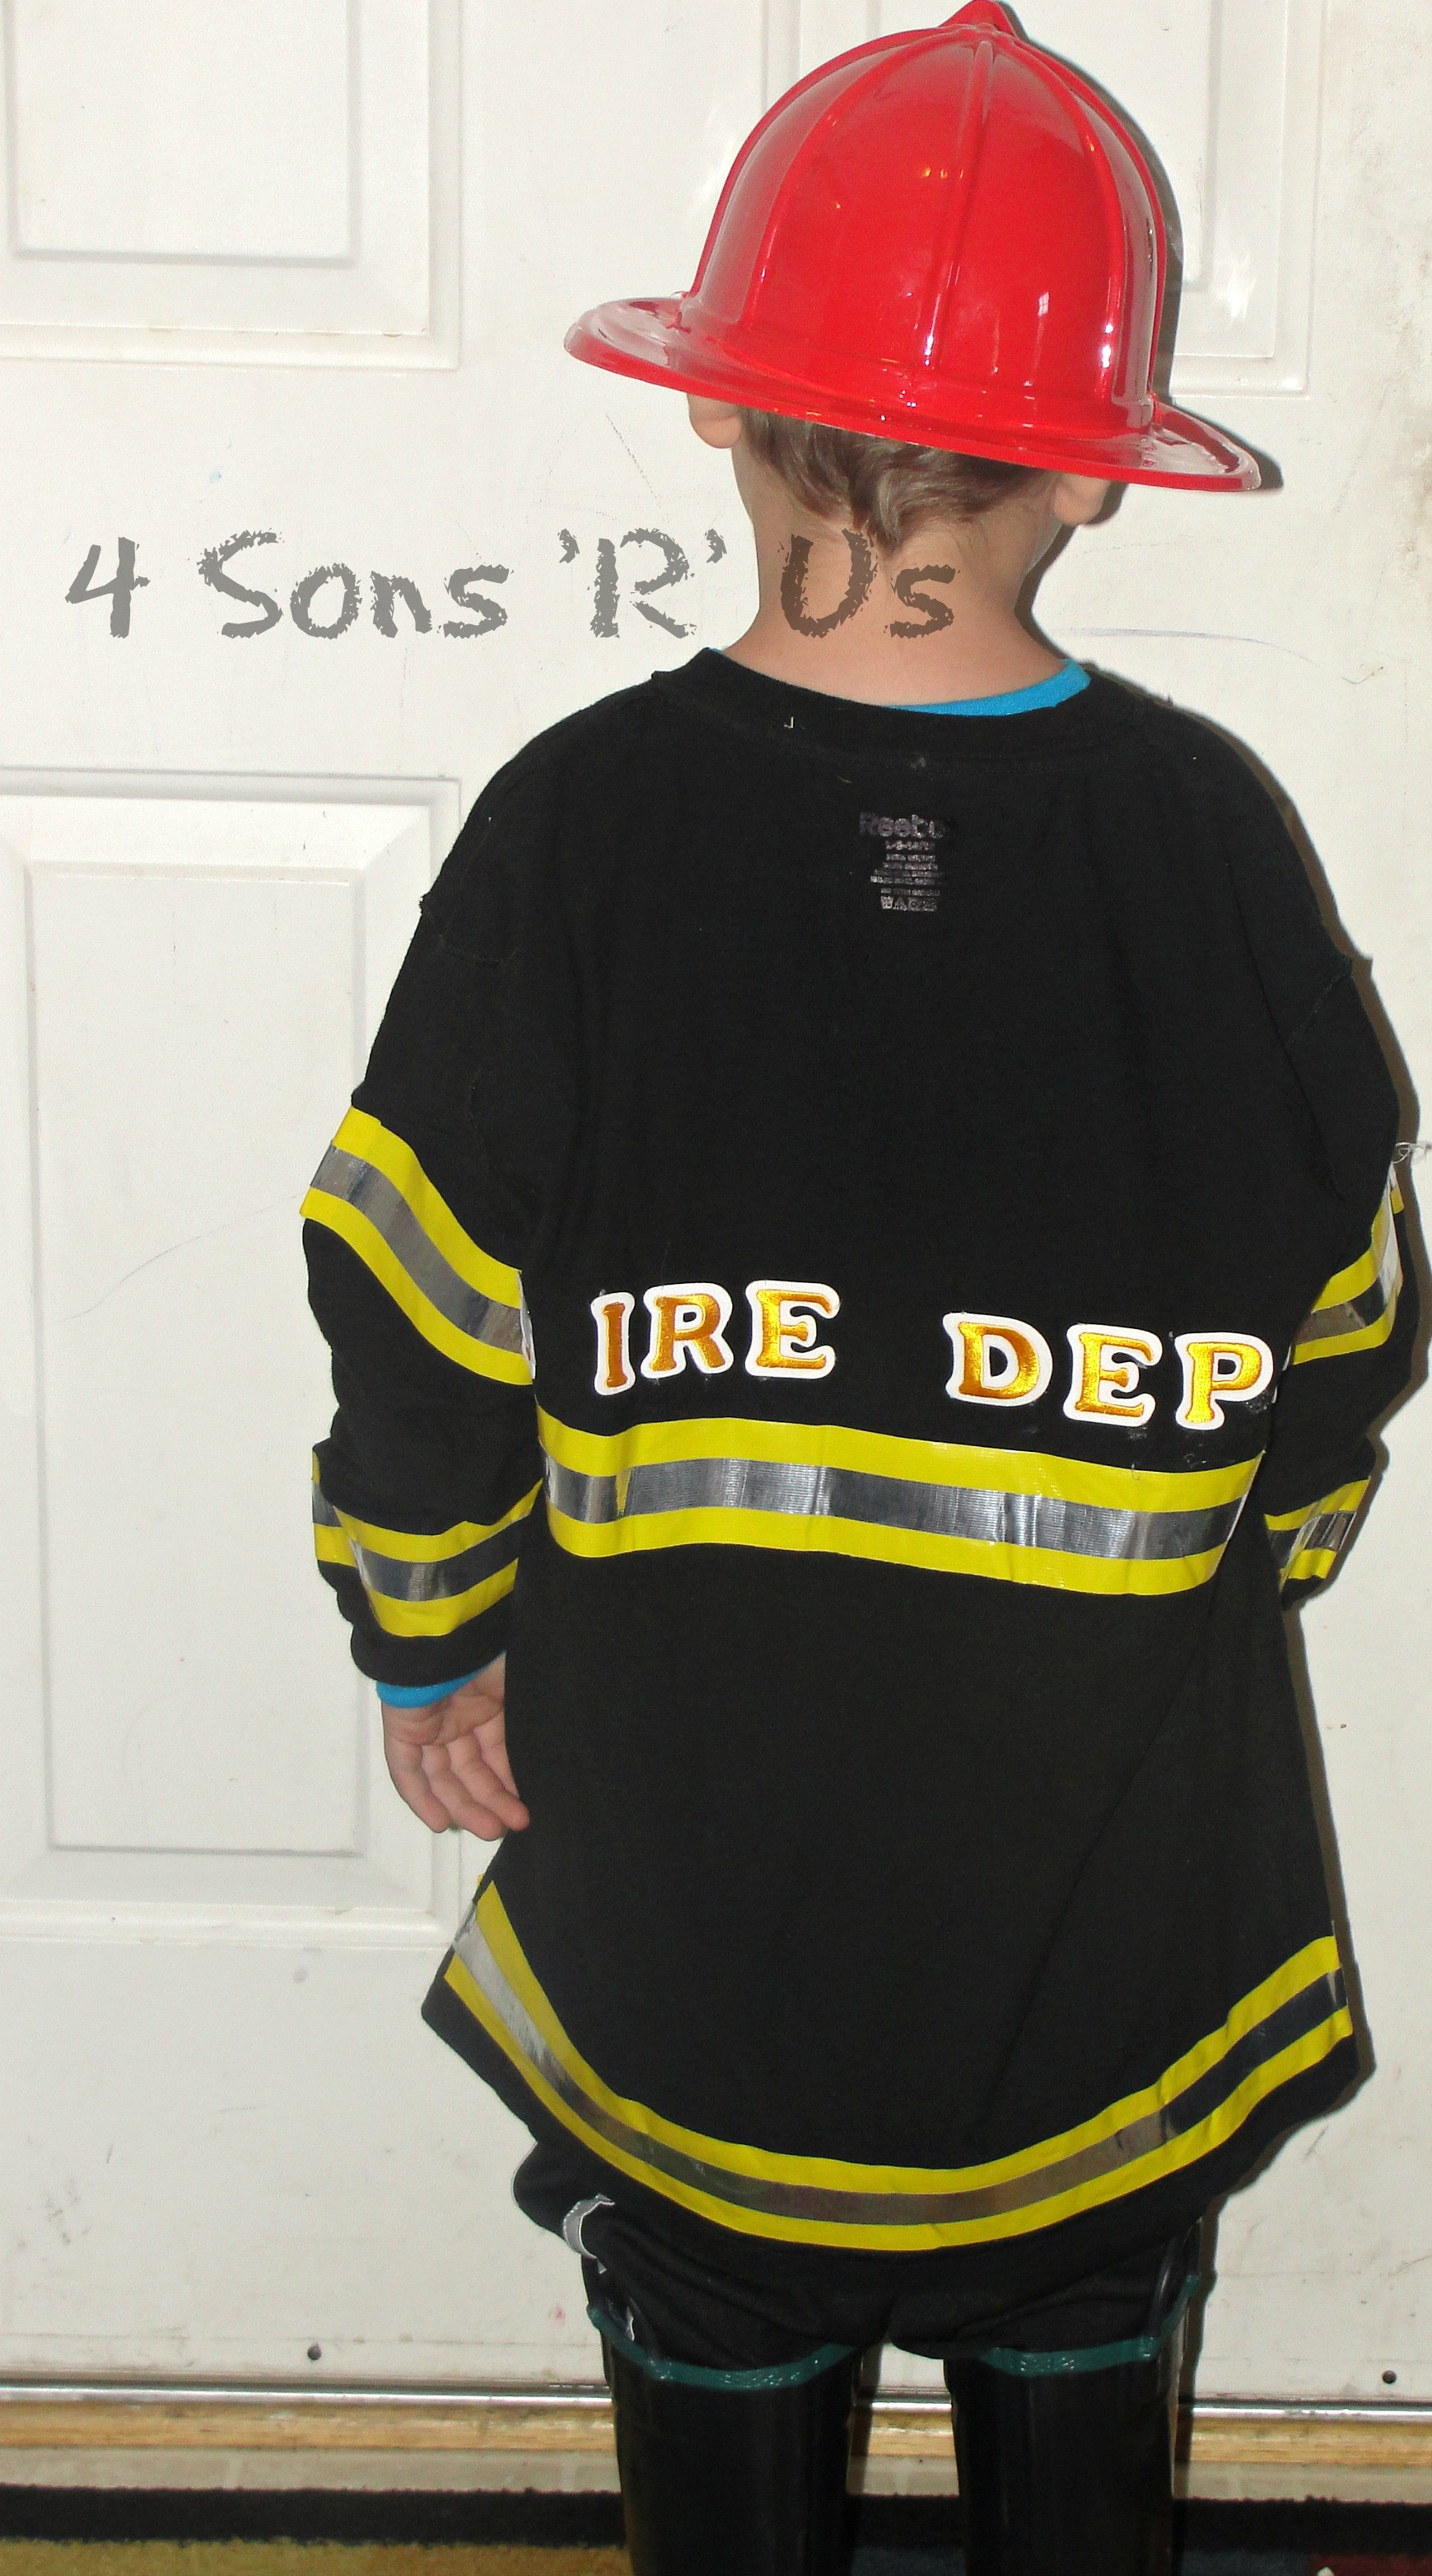 DIY Firefighter Costume
 DIY Fireman Costume 4 Sons R Us